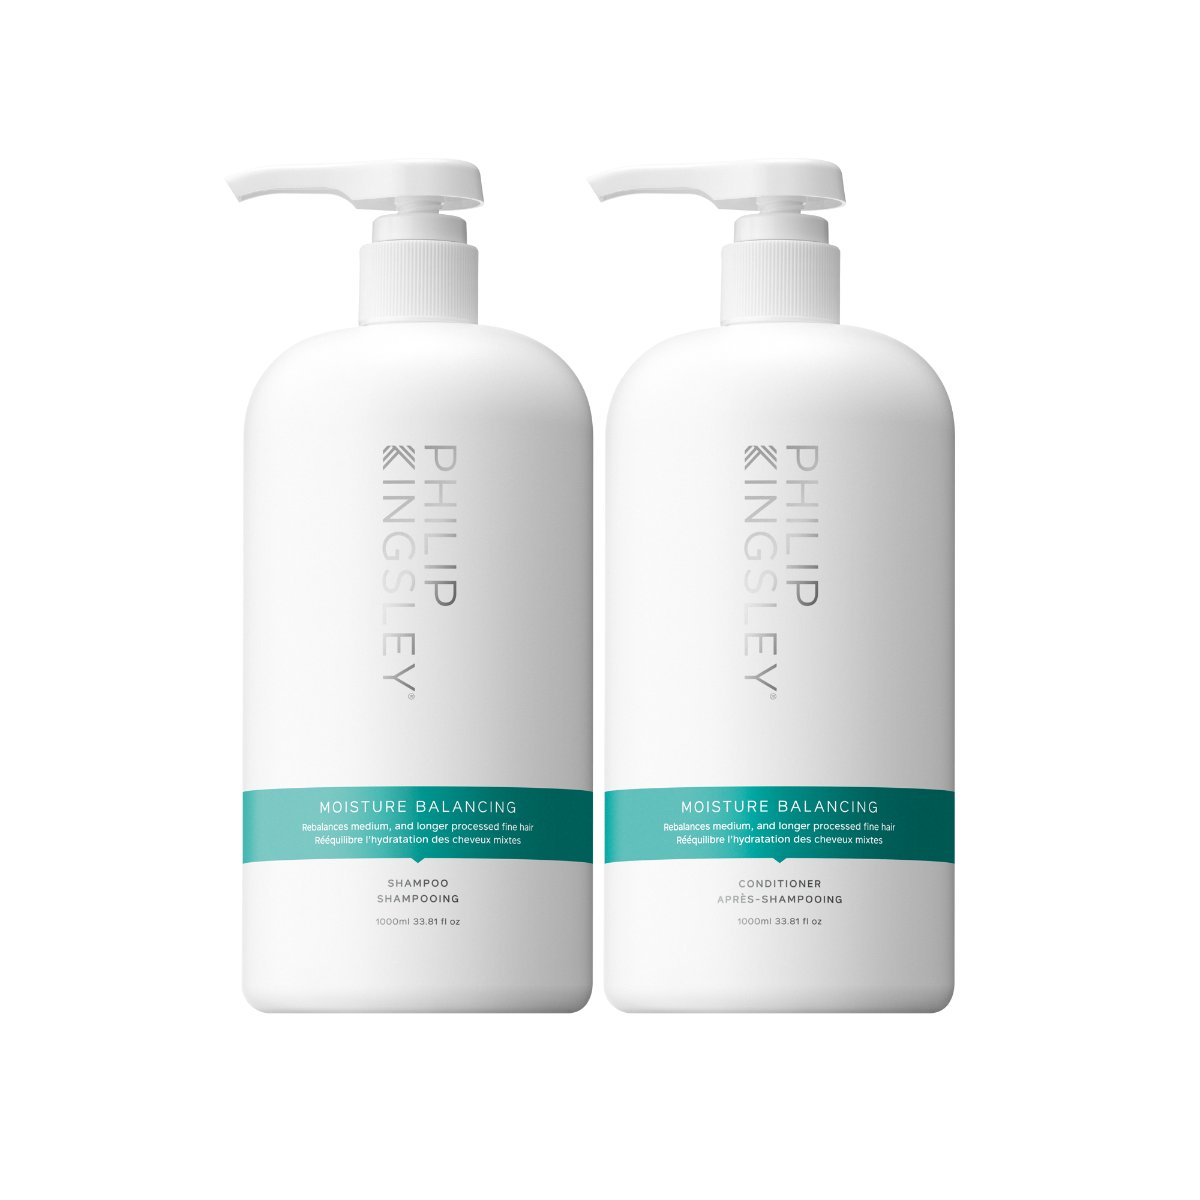 Moisture Balancing Combination Shampoo & Moisture Balancing Combination Conditioner Supersize Duo US